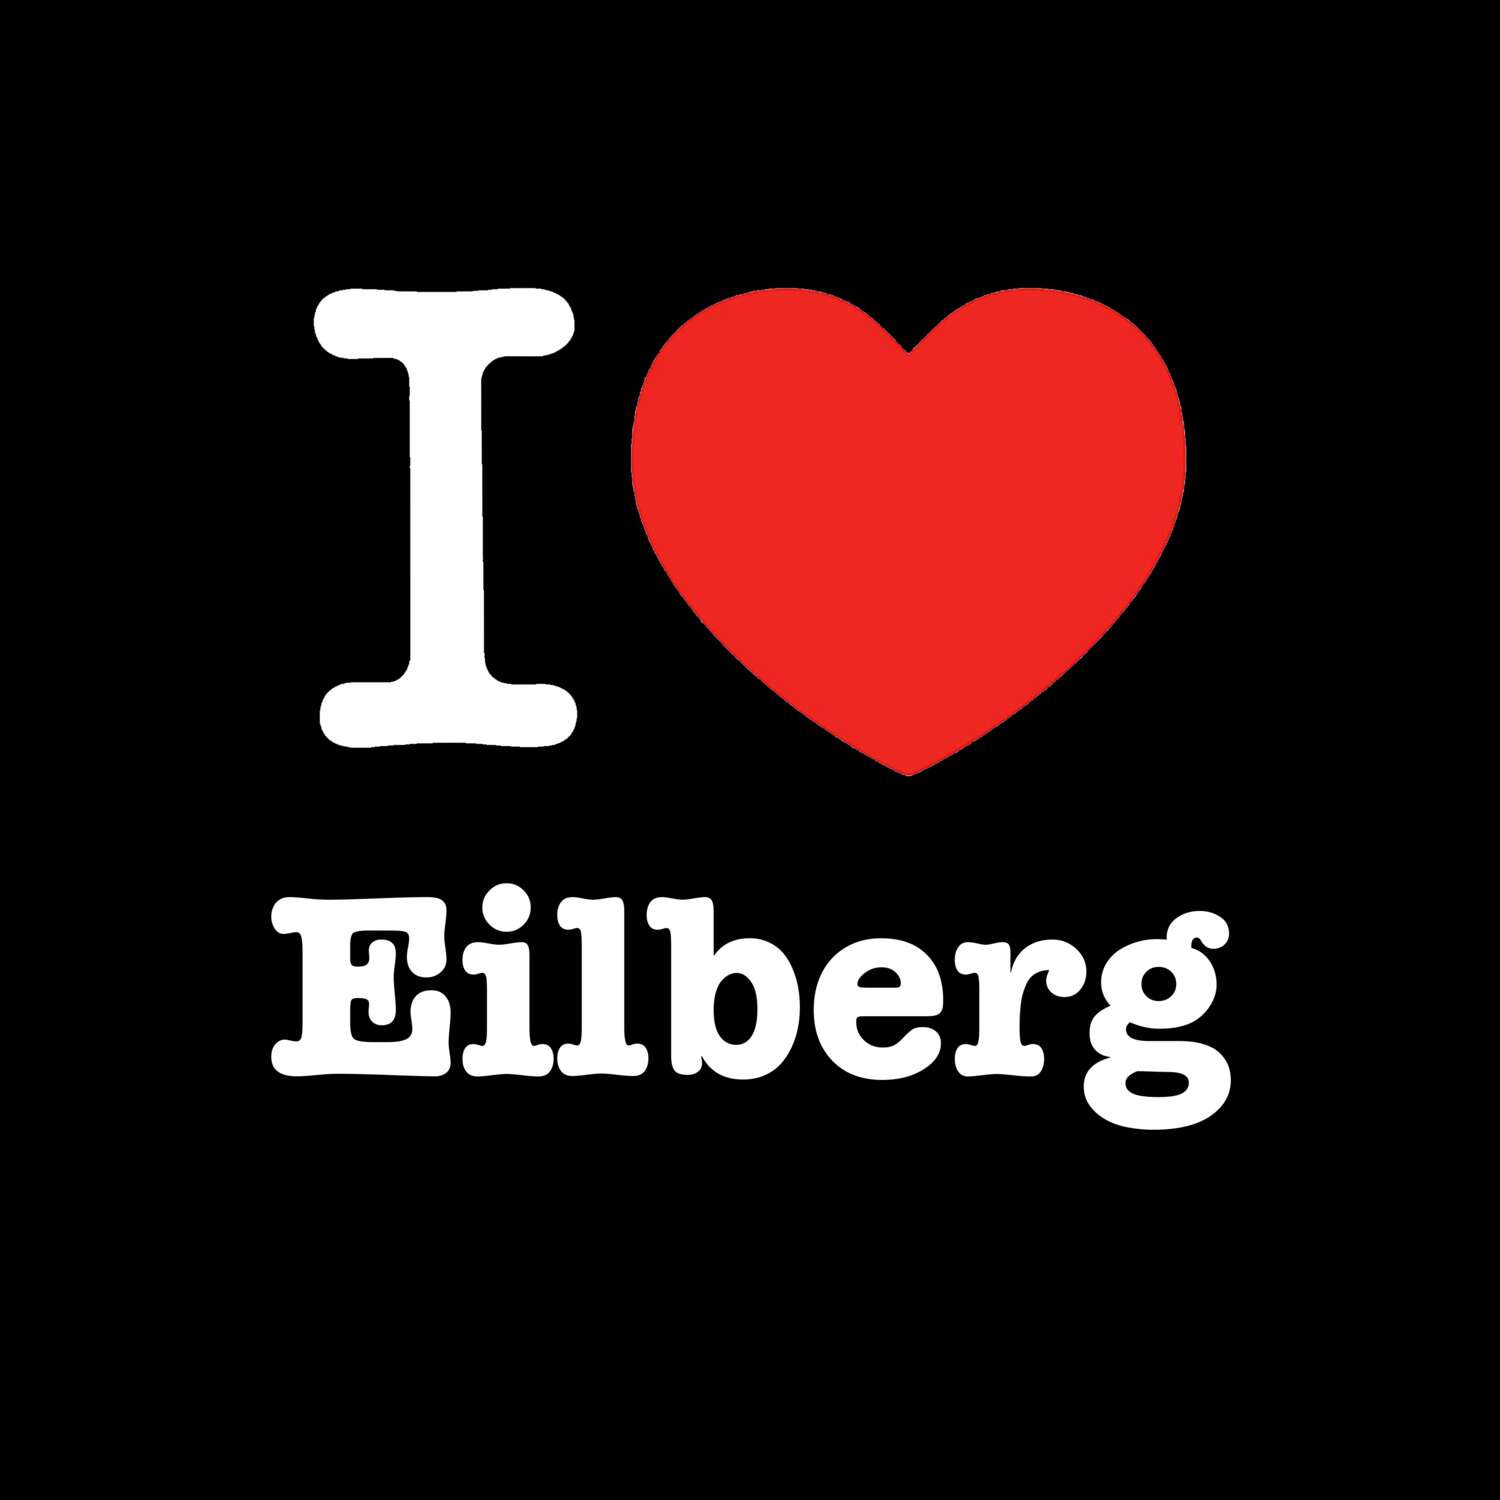 Eilberg T-Shirt »I love«